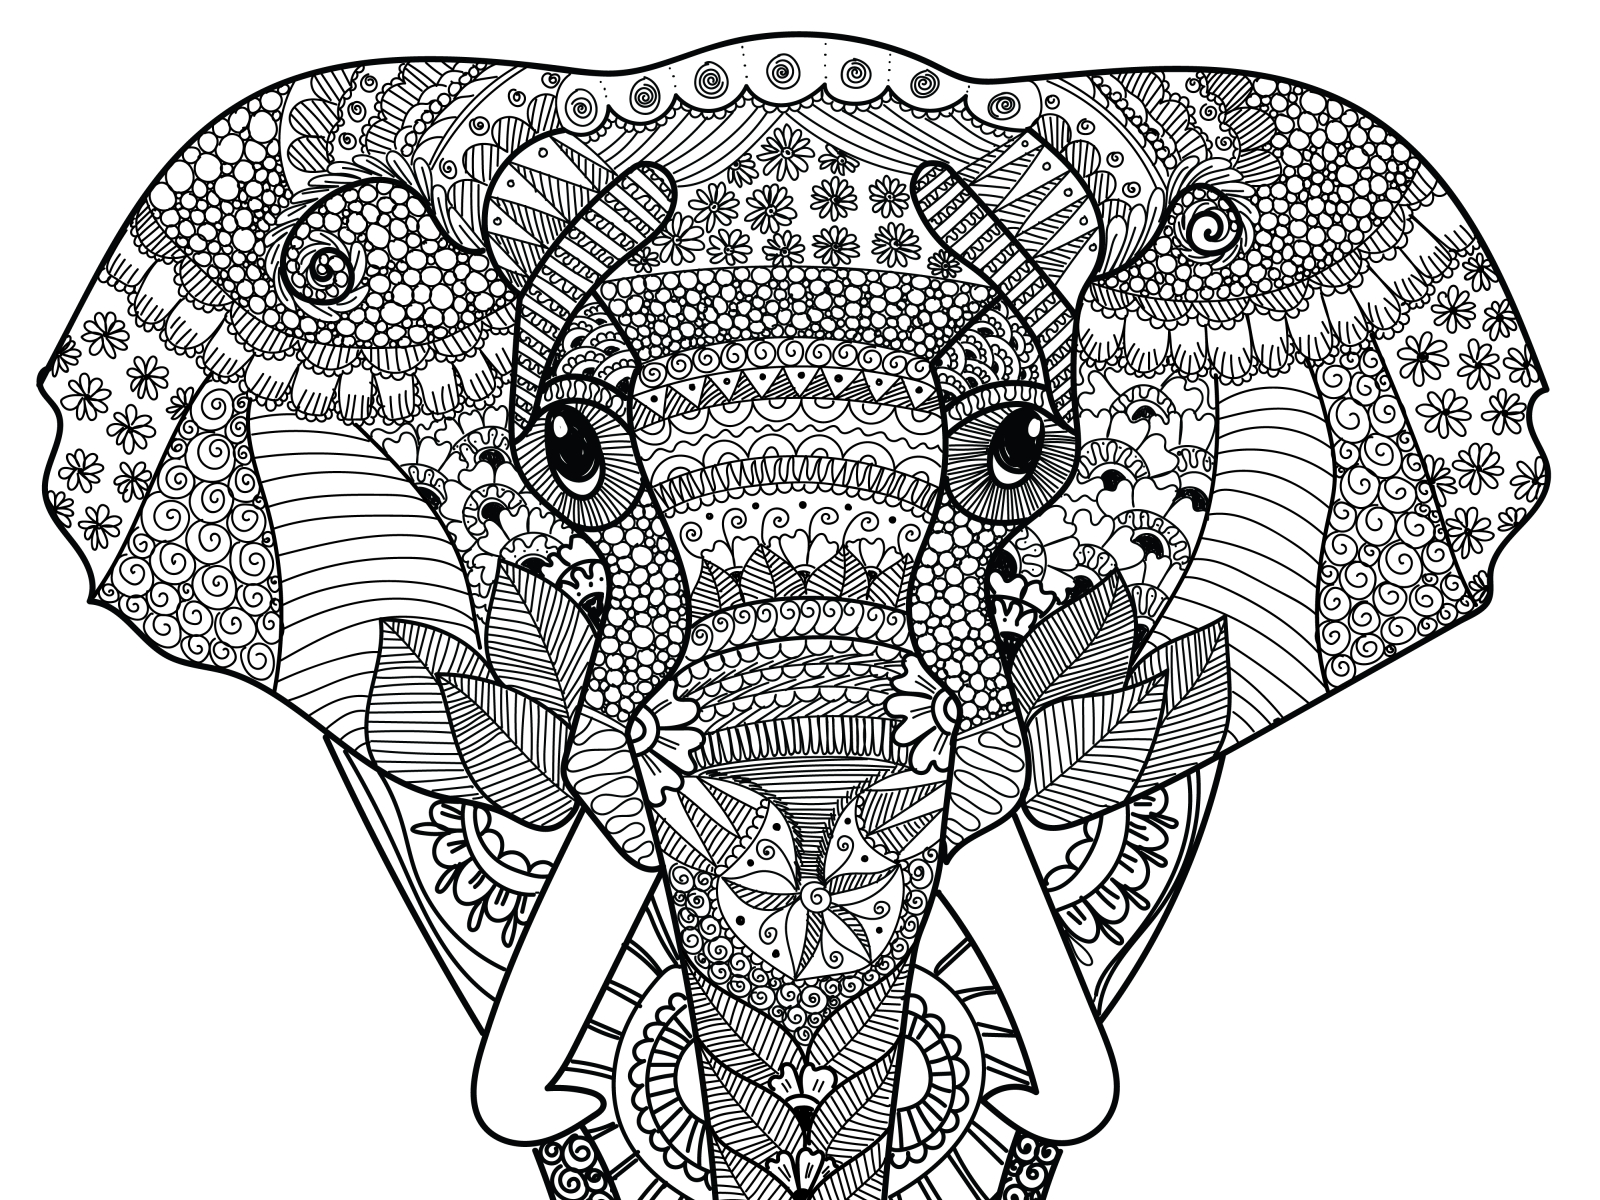 Elephant Mandala by Sapna Kissoondoyal on Dribbble